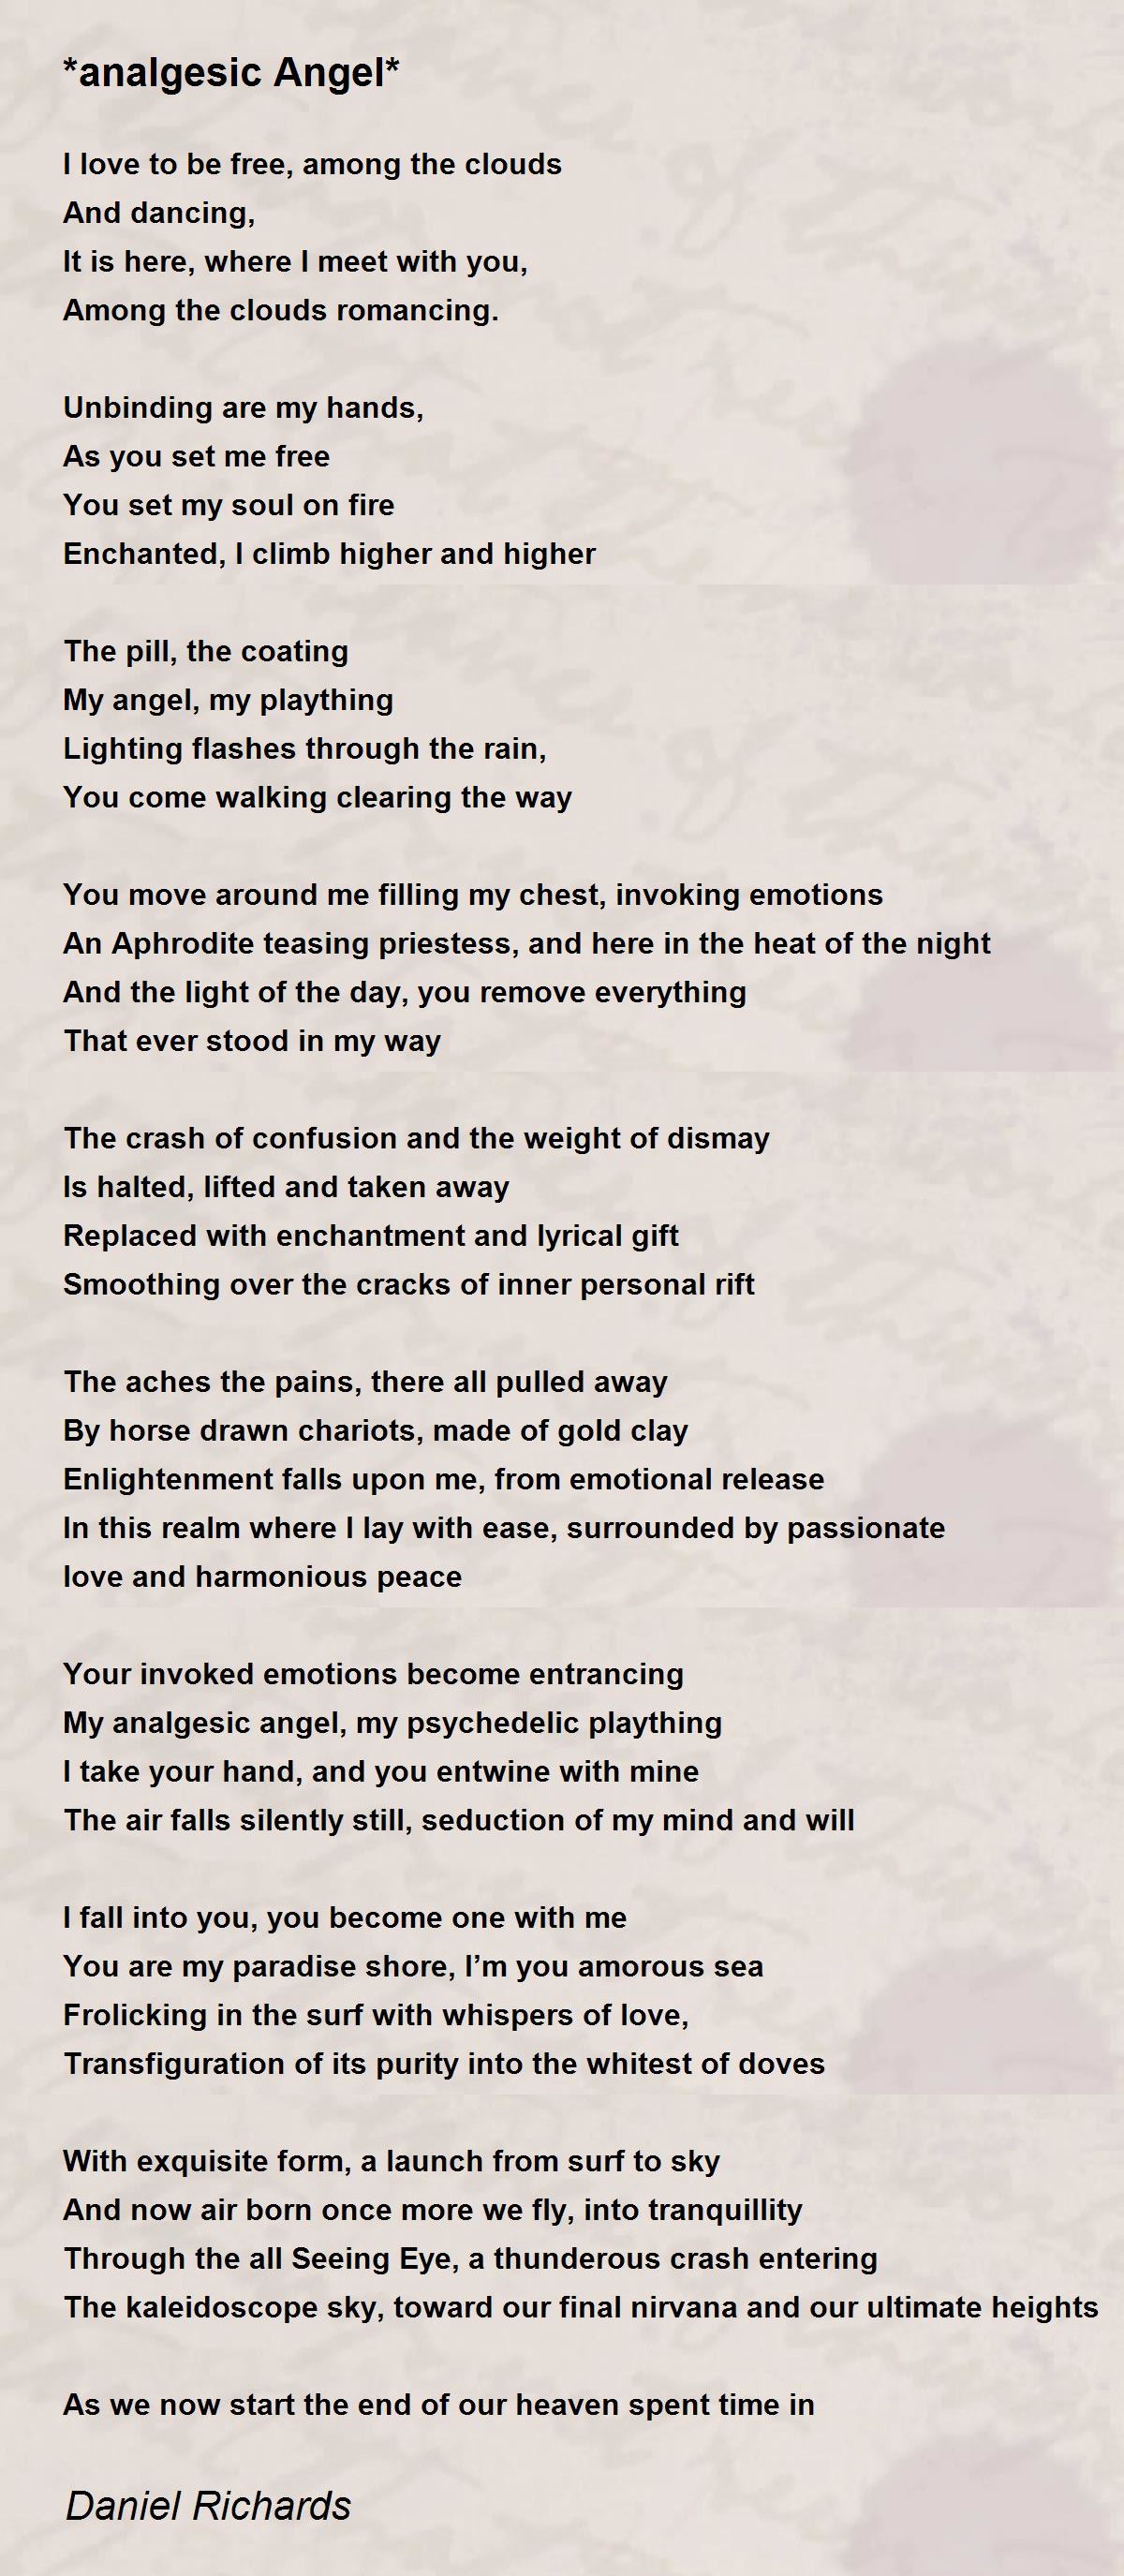 *analgesic Angel* - *analgesic Angel* Poem by Daniel Richards